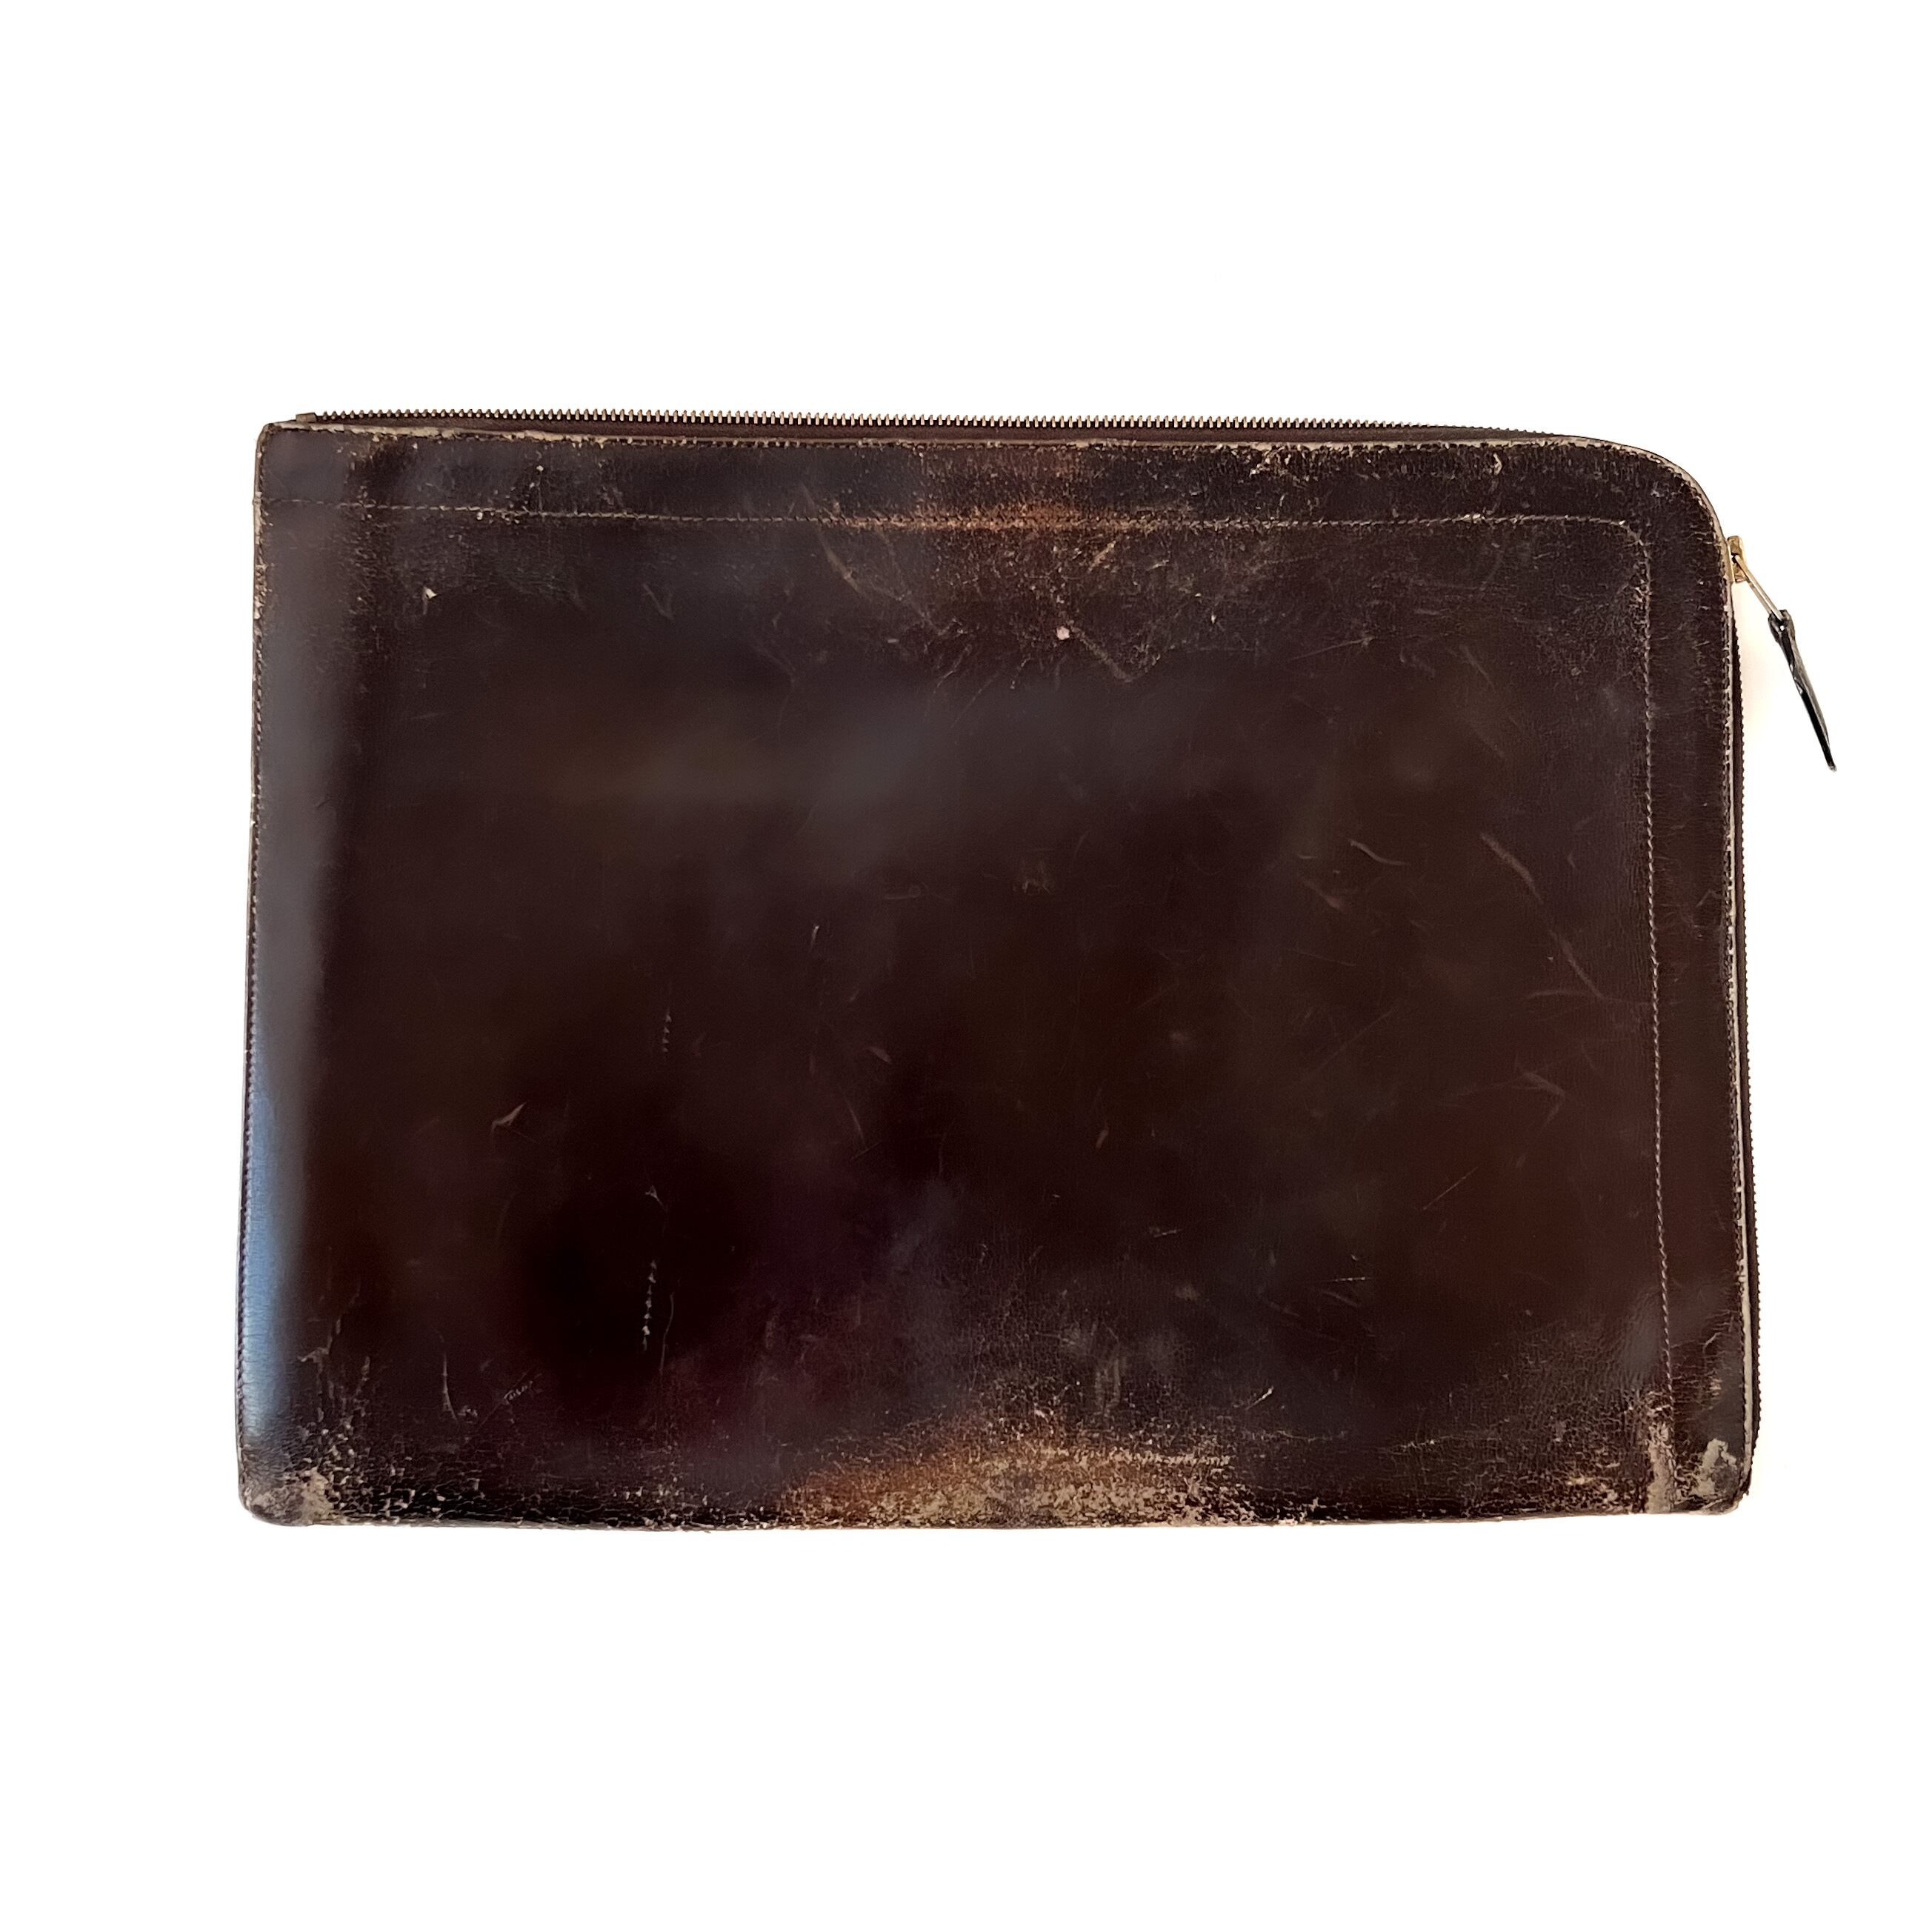 HERMES” vintage dark brown leather clutch bag ヴィンテージエルメス